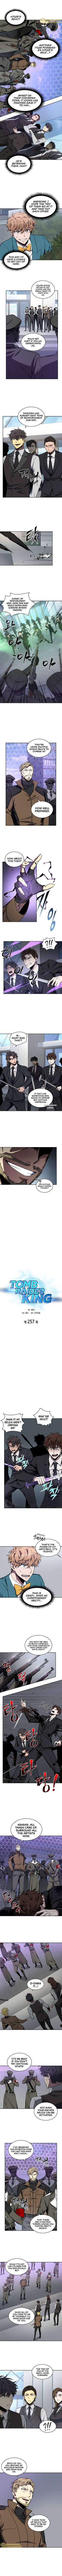 Tomb Raider King - Page 2